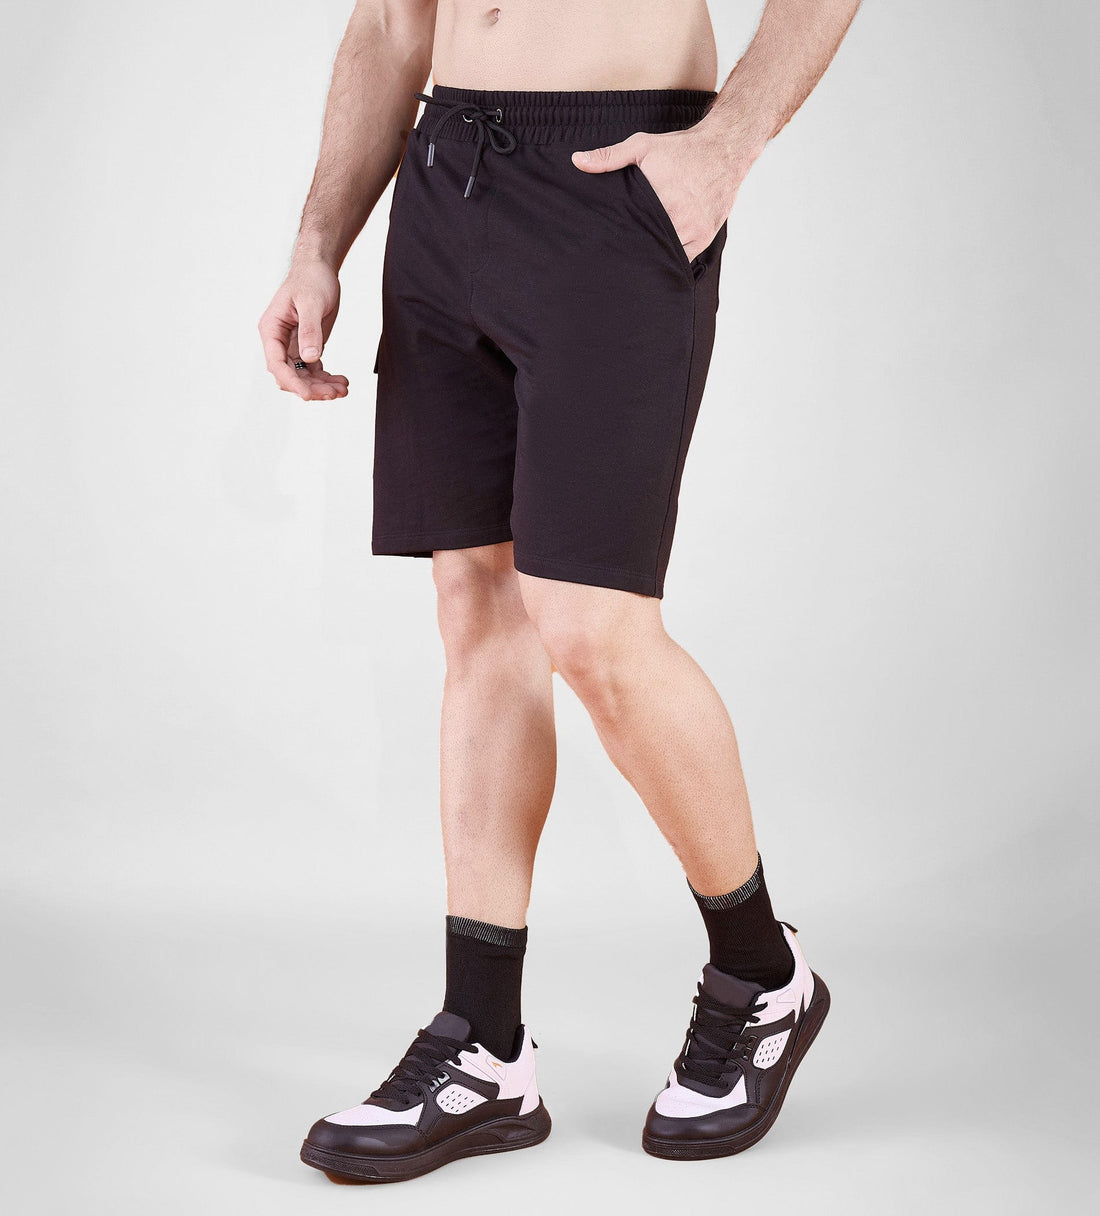 Shorts Shorts Black Bold Emblem Shorts For Men